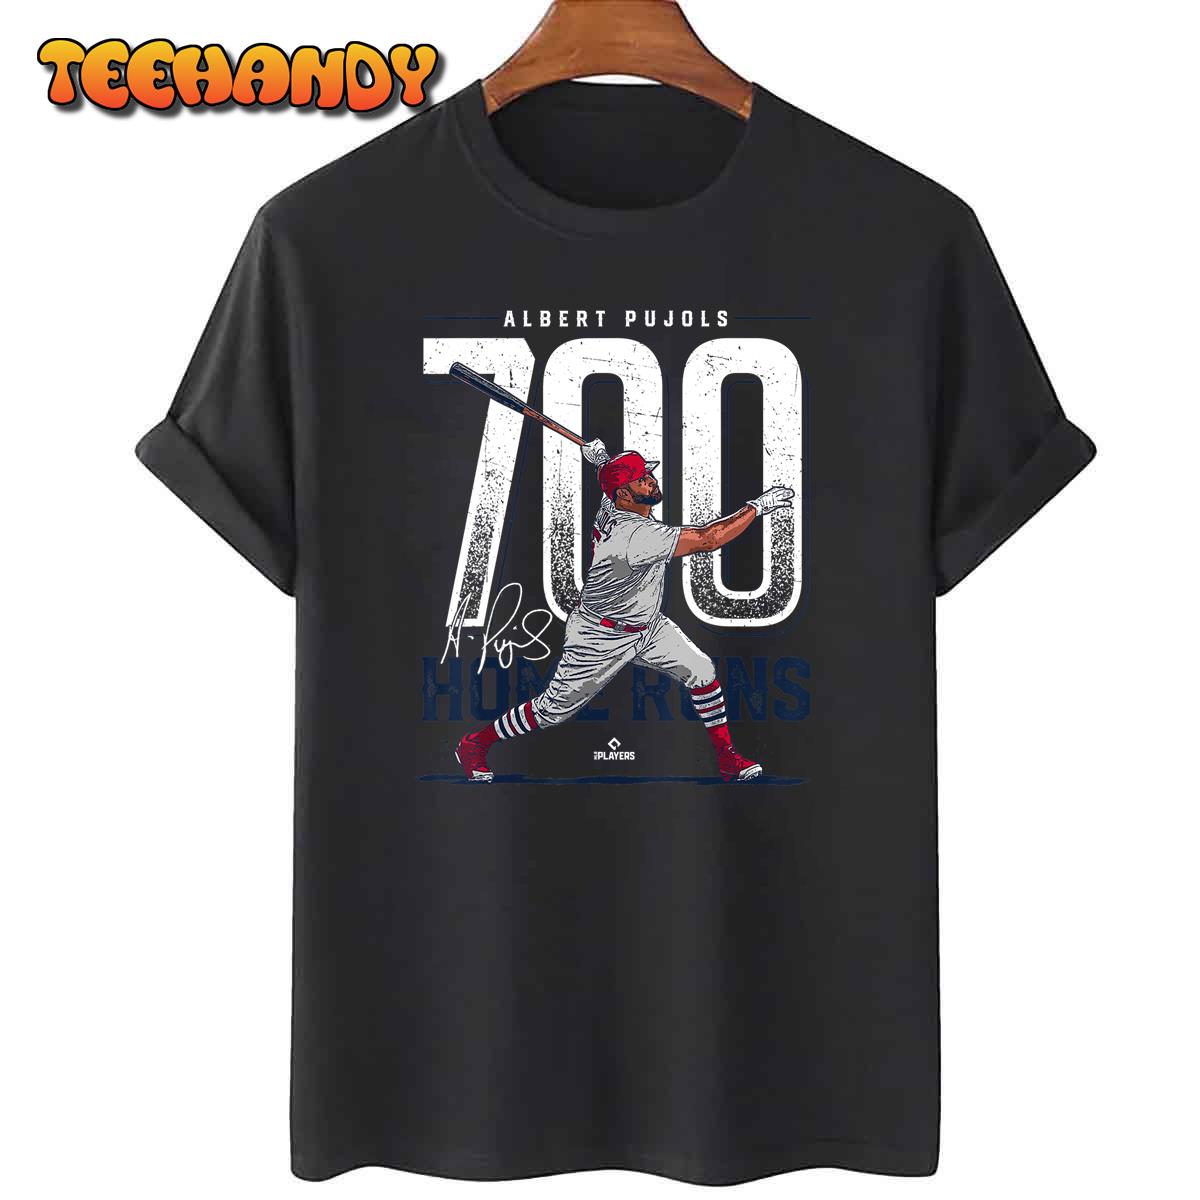 Albert Pujols 700 Home Runs Albert Pujols St Louis MLBPA Unisex T-Shirt